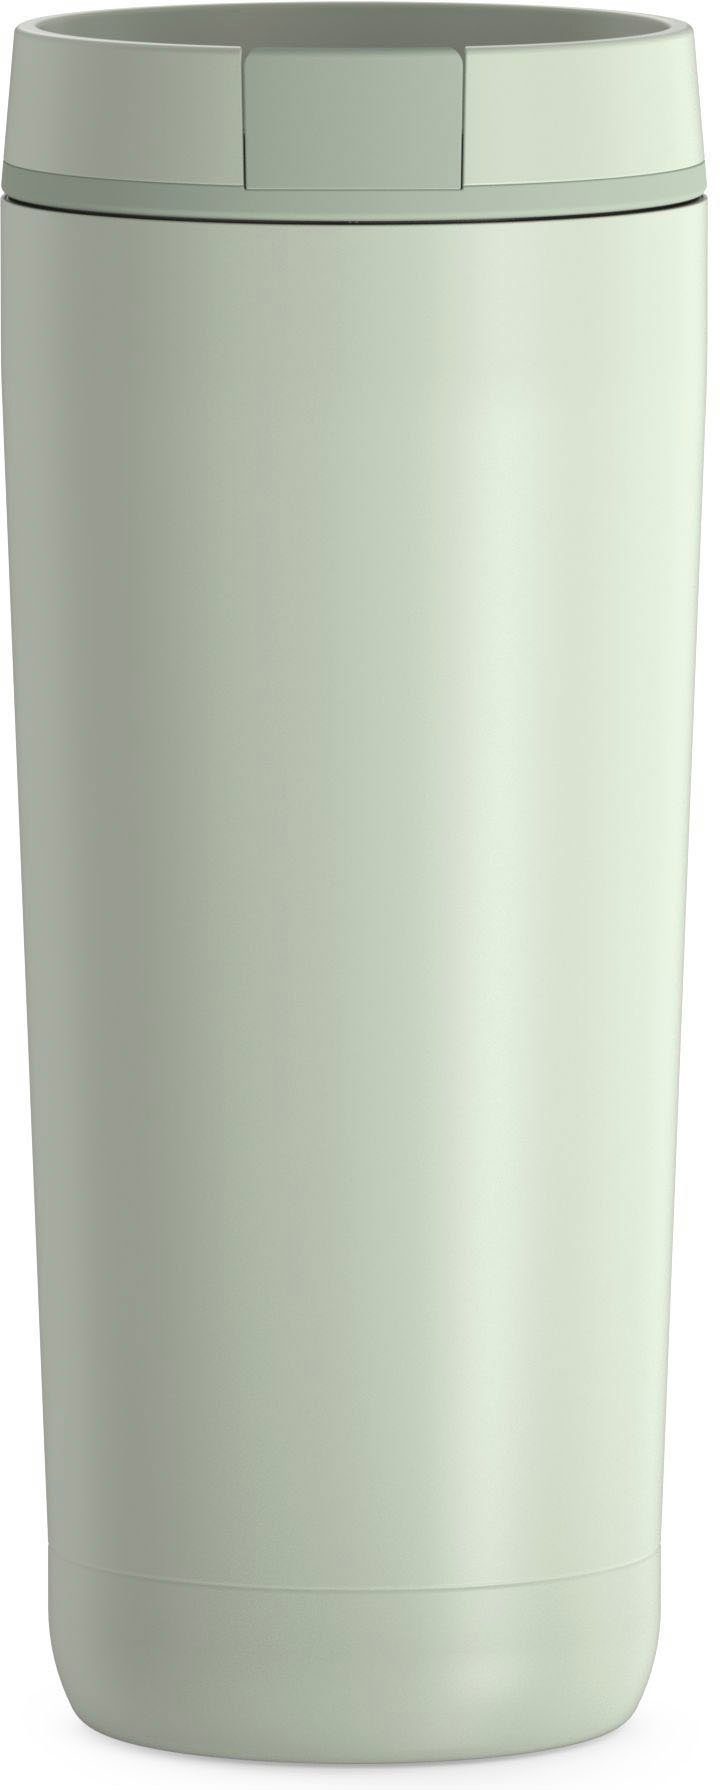 THERMOS Thermobehälter GUARDIAN FOOD JAR, matcha (1-tlg), doppelwandiger Edelstahl, Edelstahl Silikon, mat green